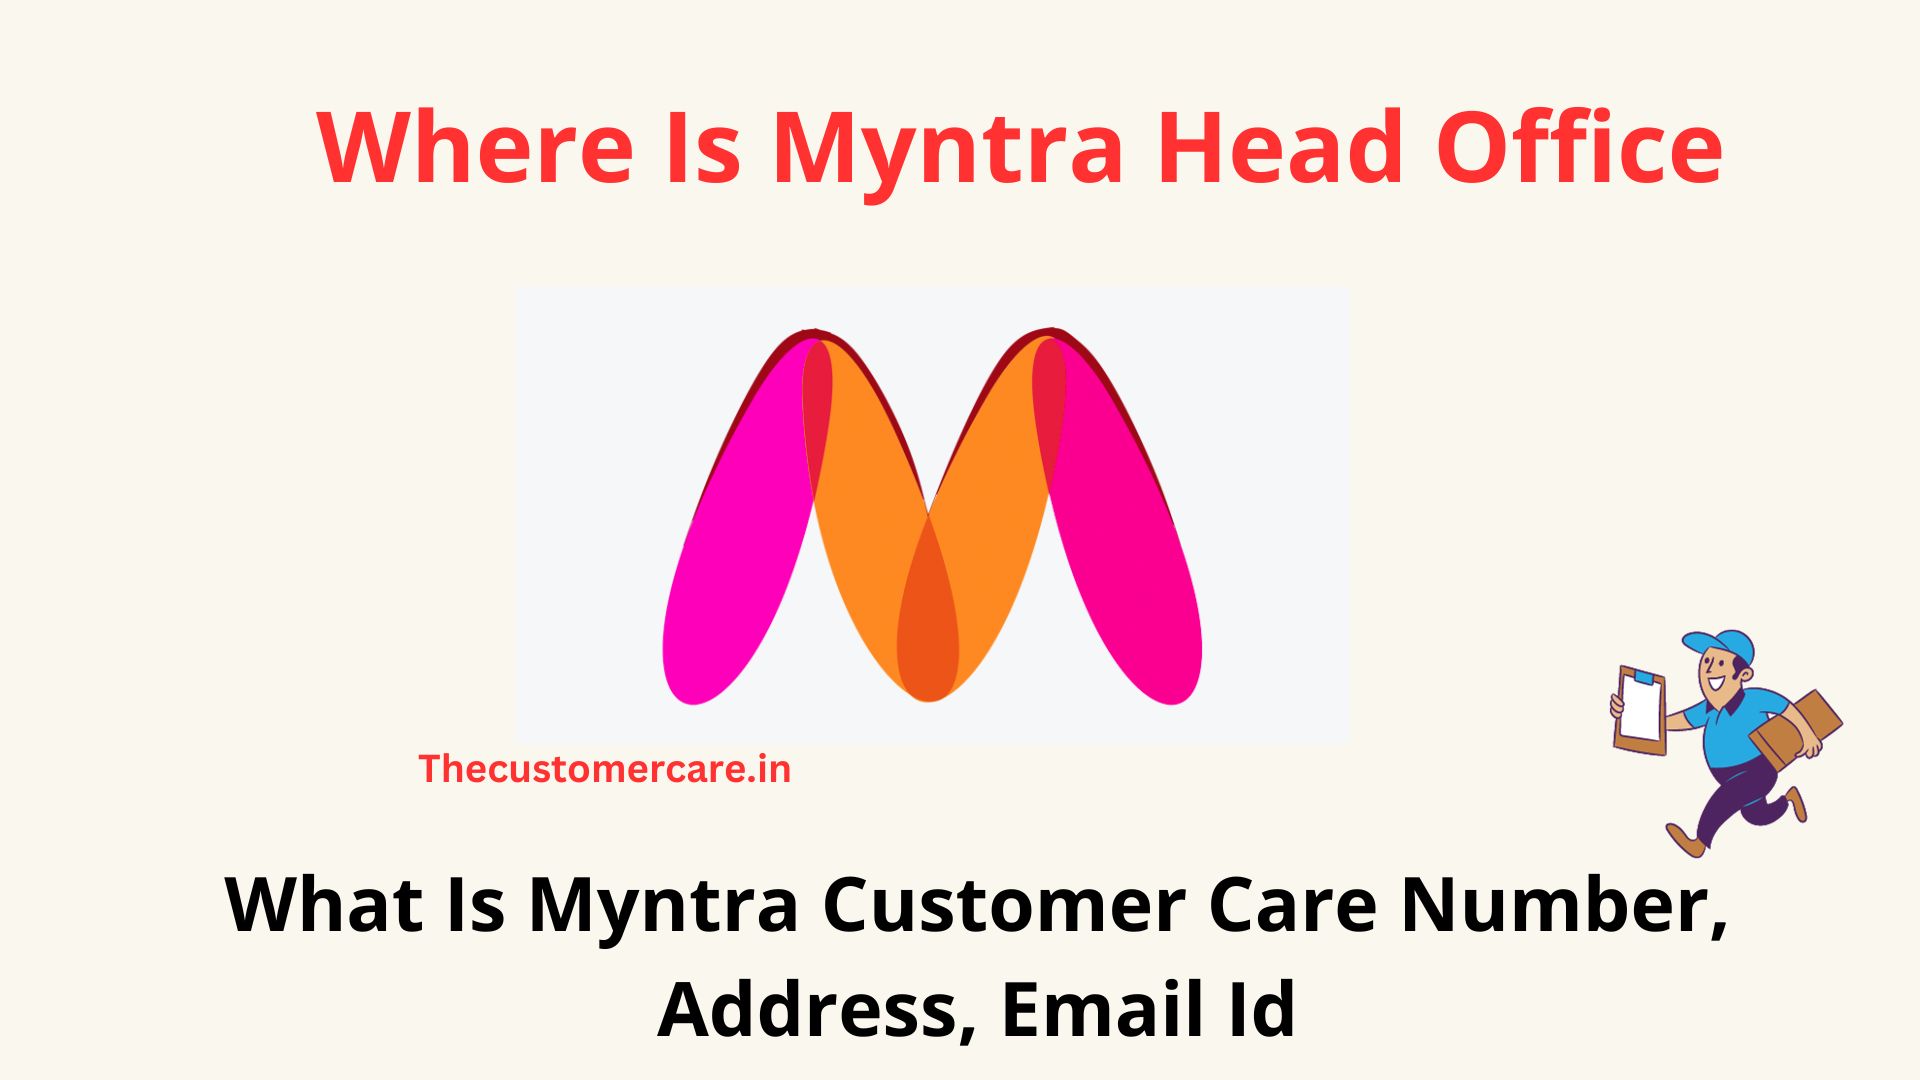 Myntra Head Office